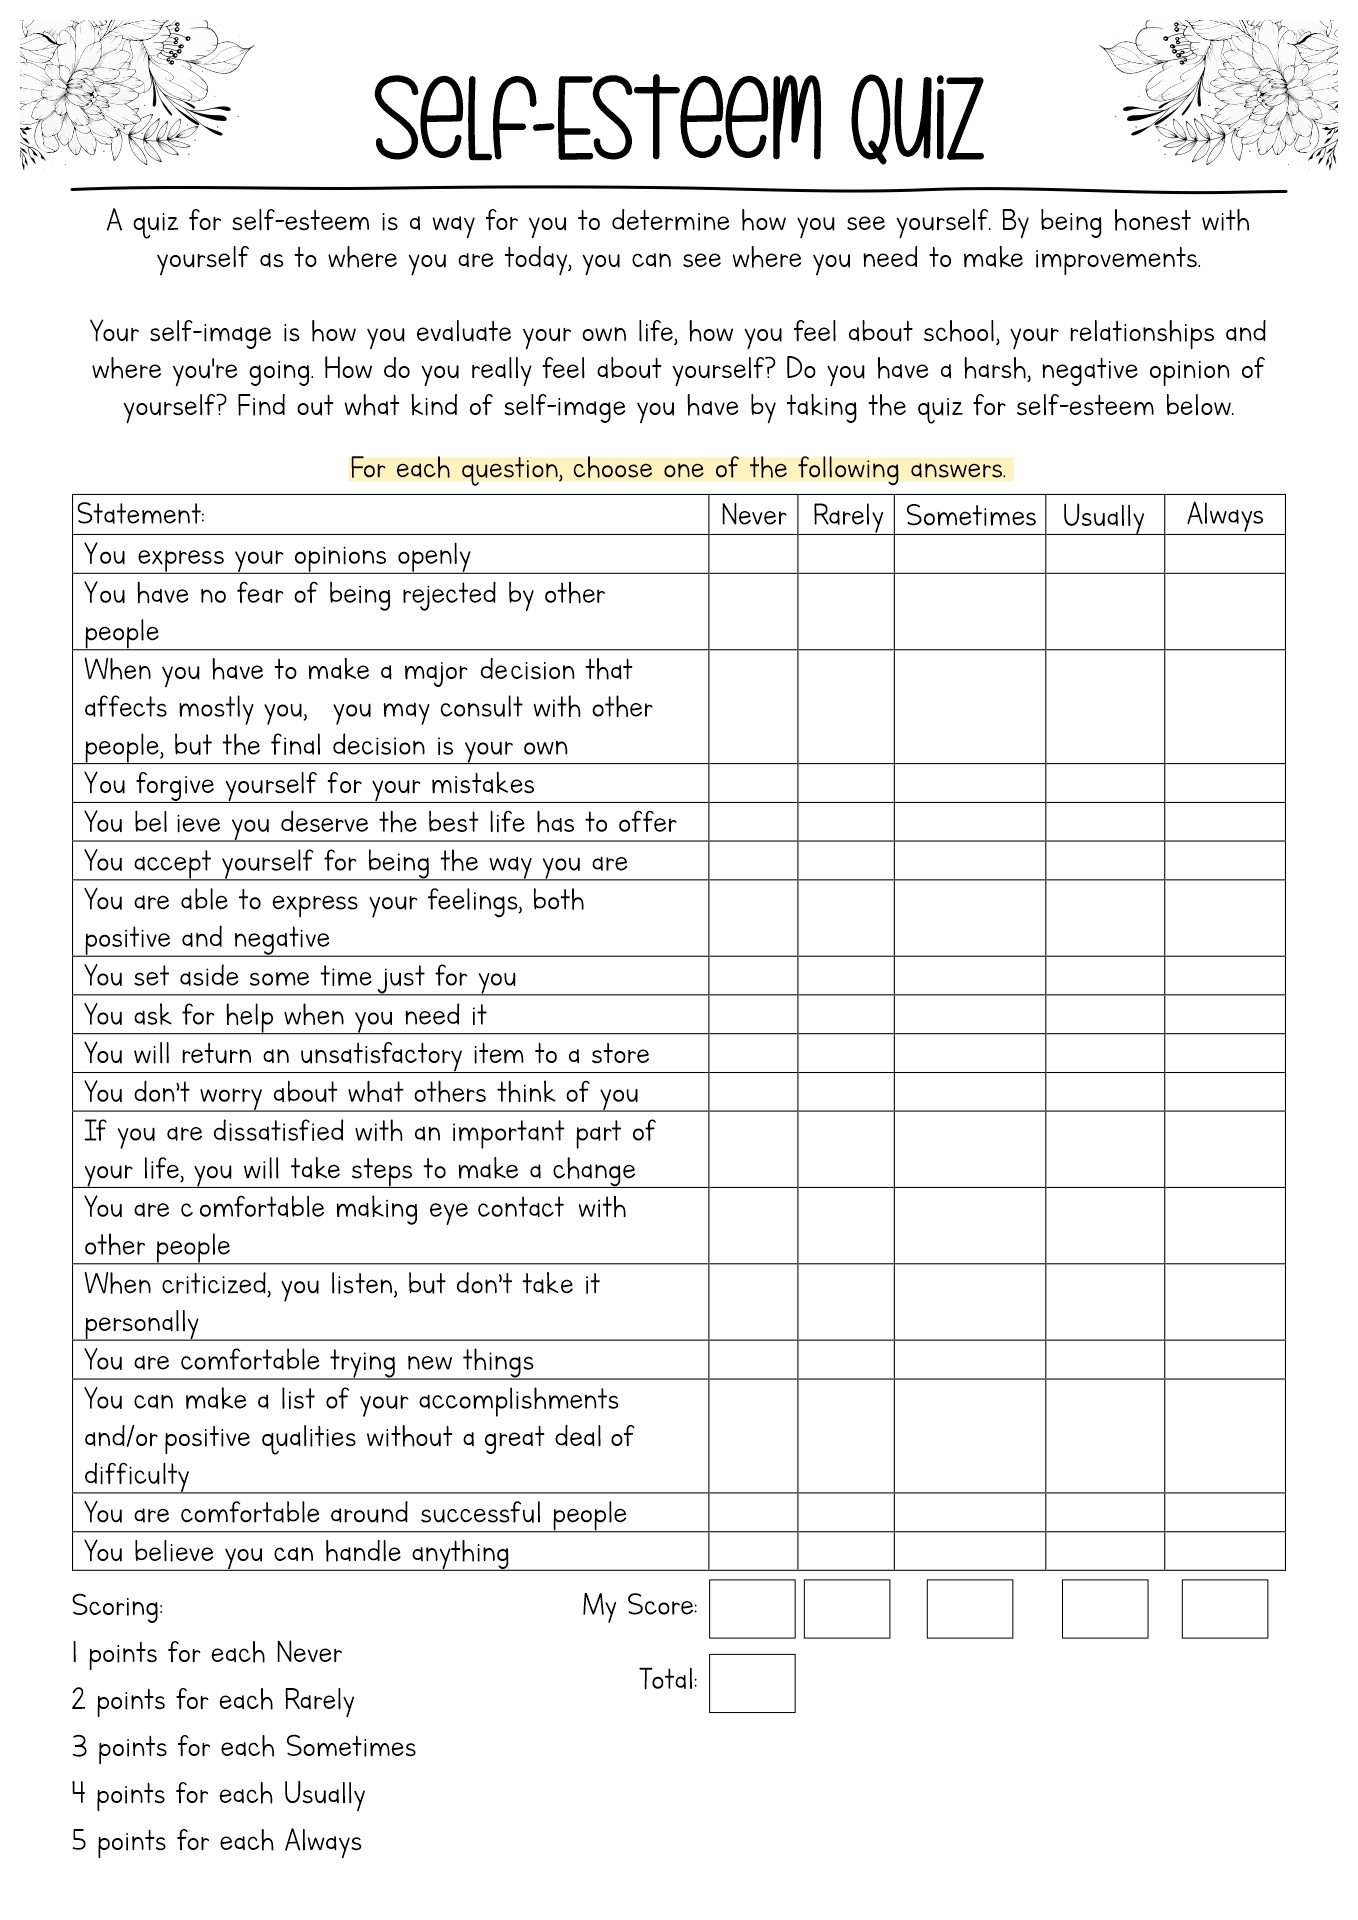 Self-Esteem Assessment Worksheet for Adults